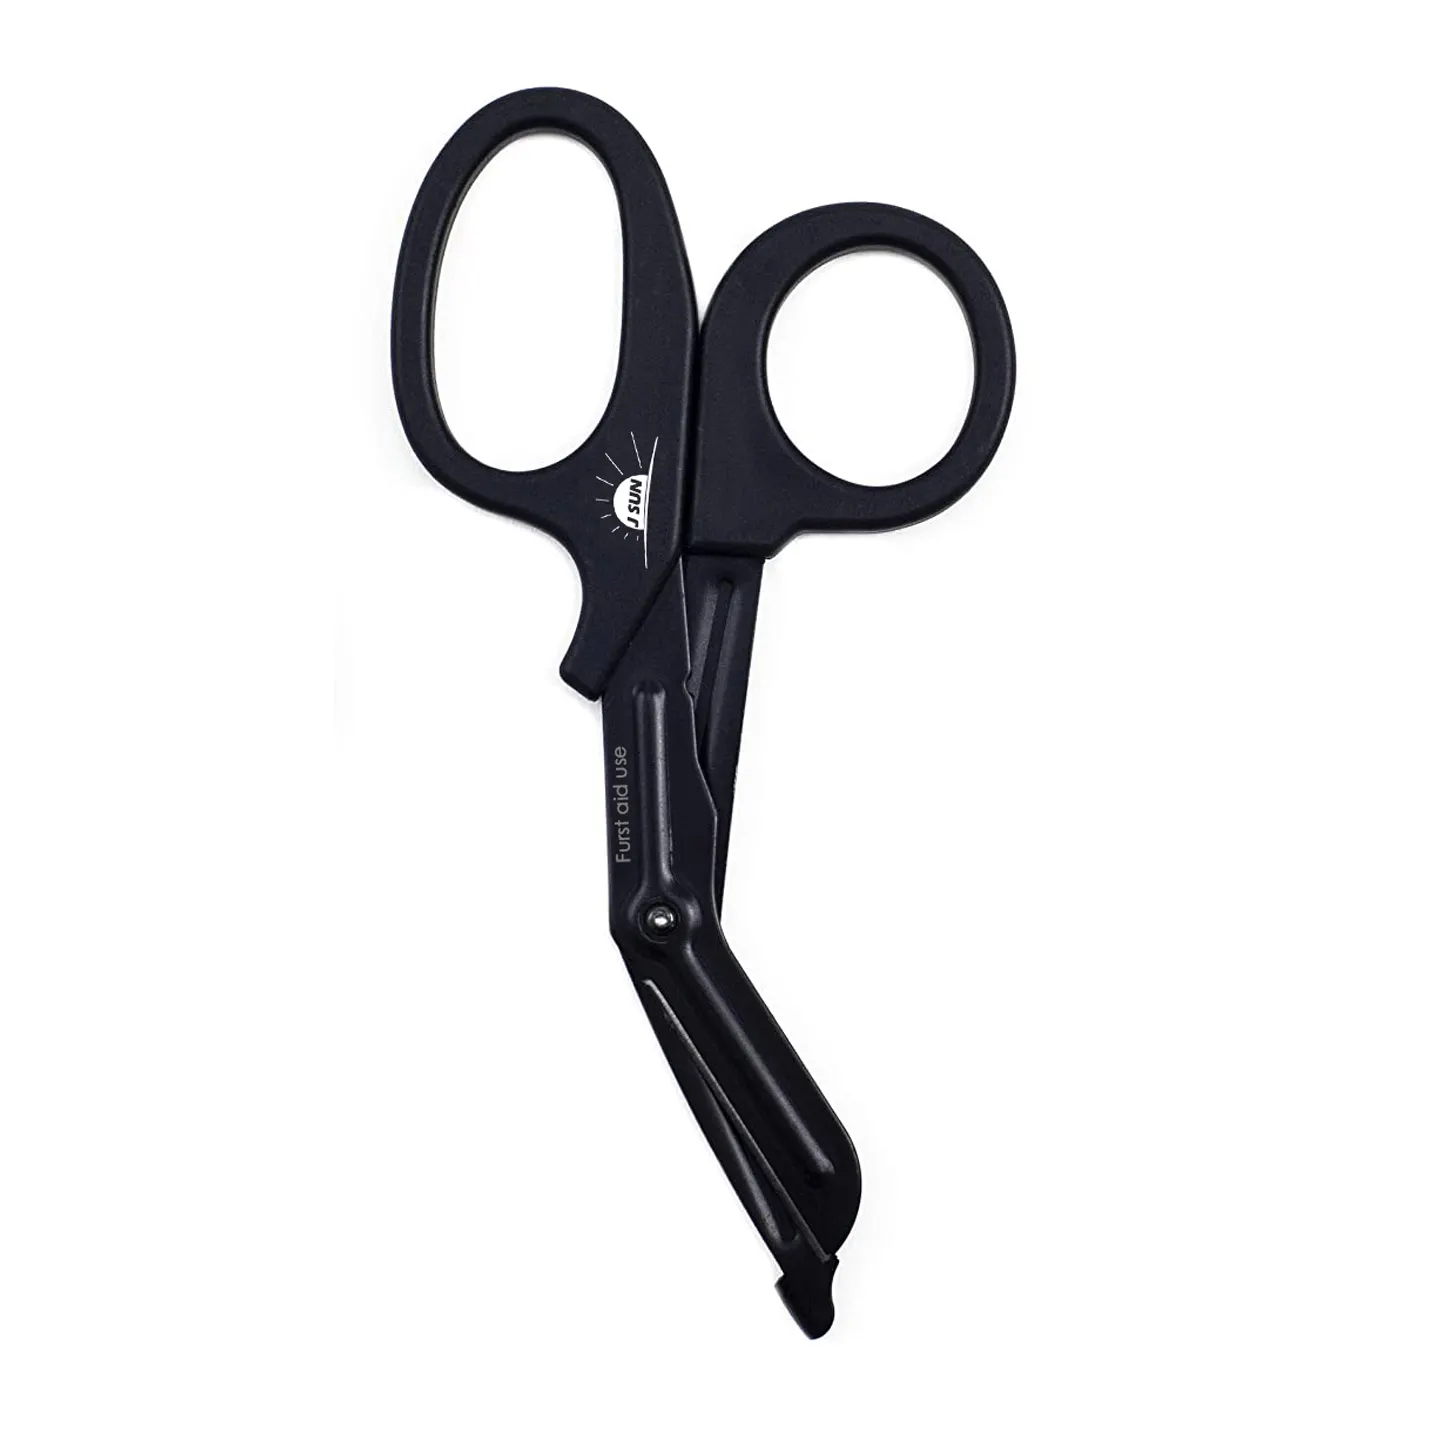 CE ISO stainless steel universal bandage scissors high quality trauma shears black blade 18.5cm